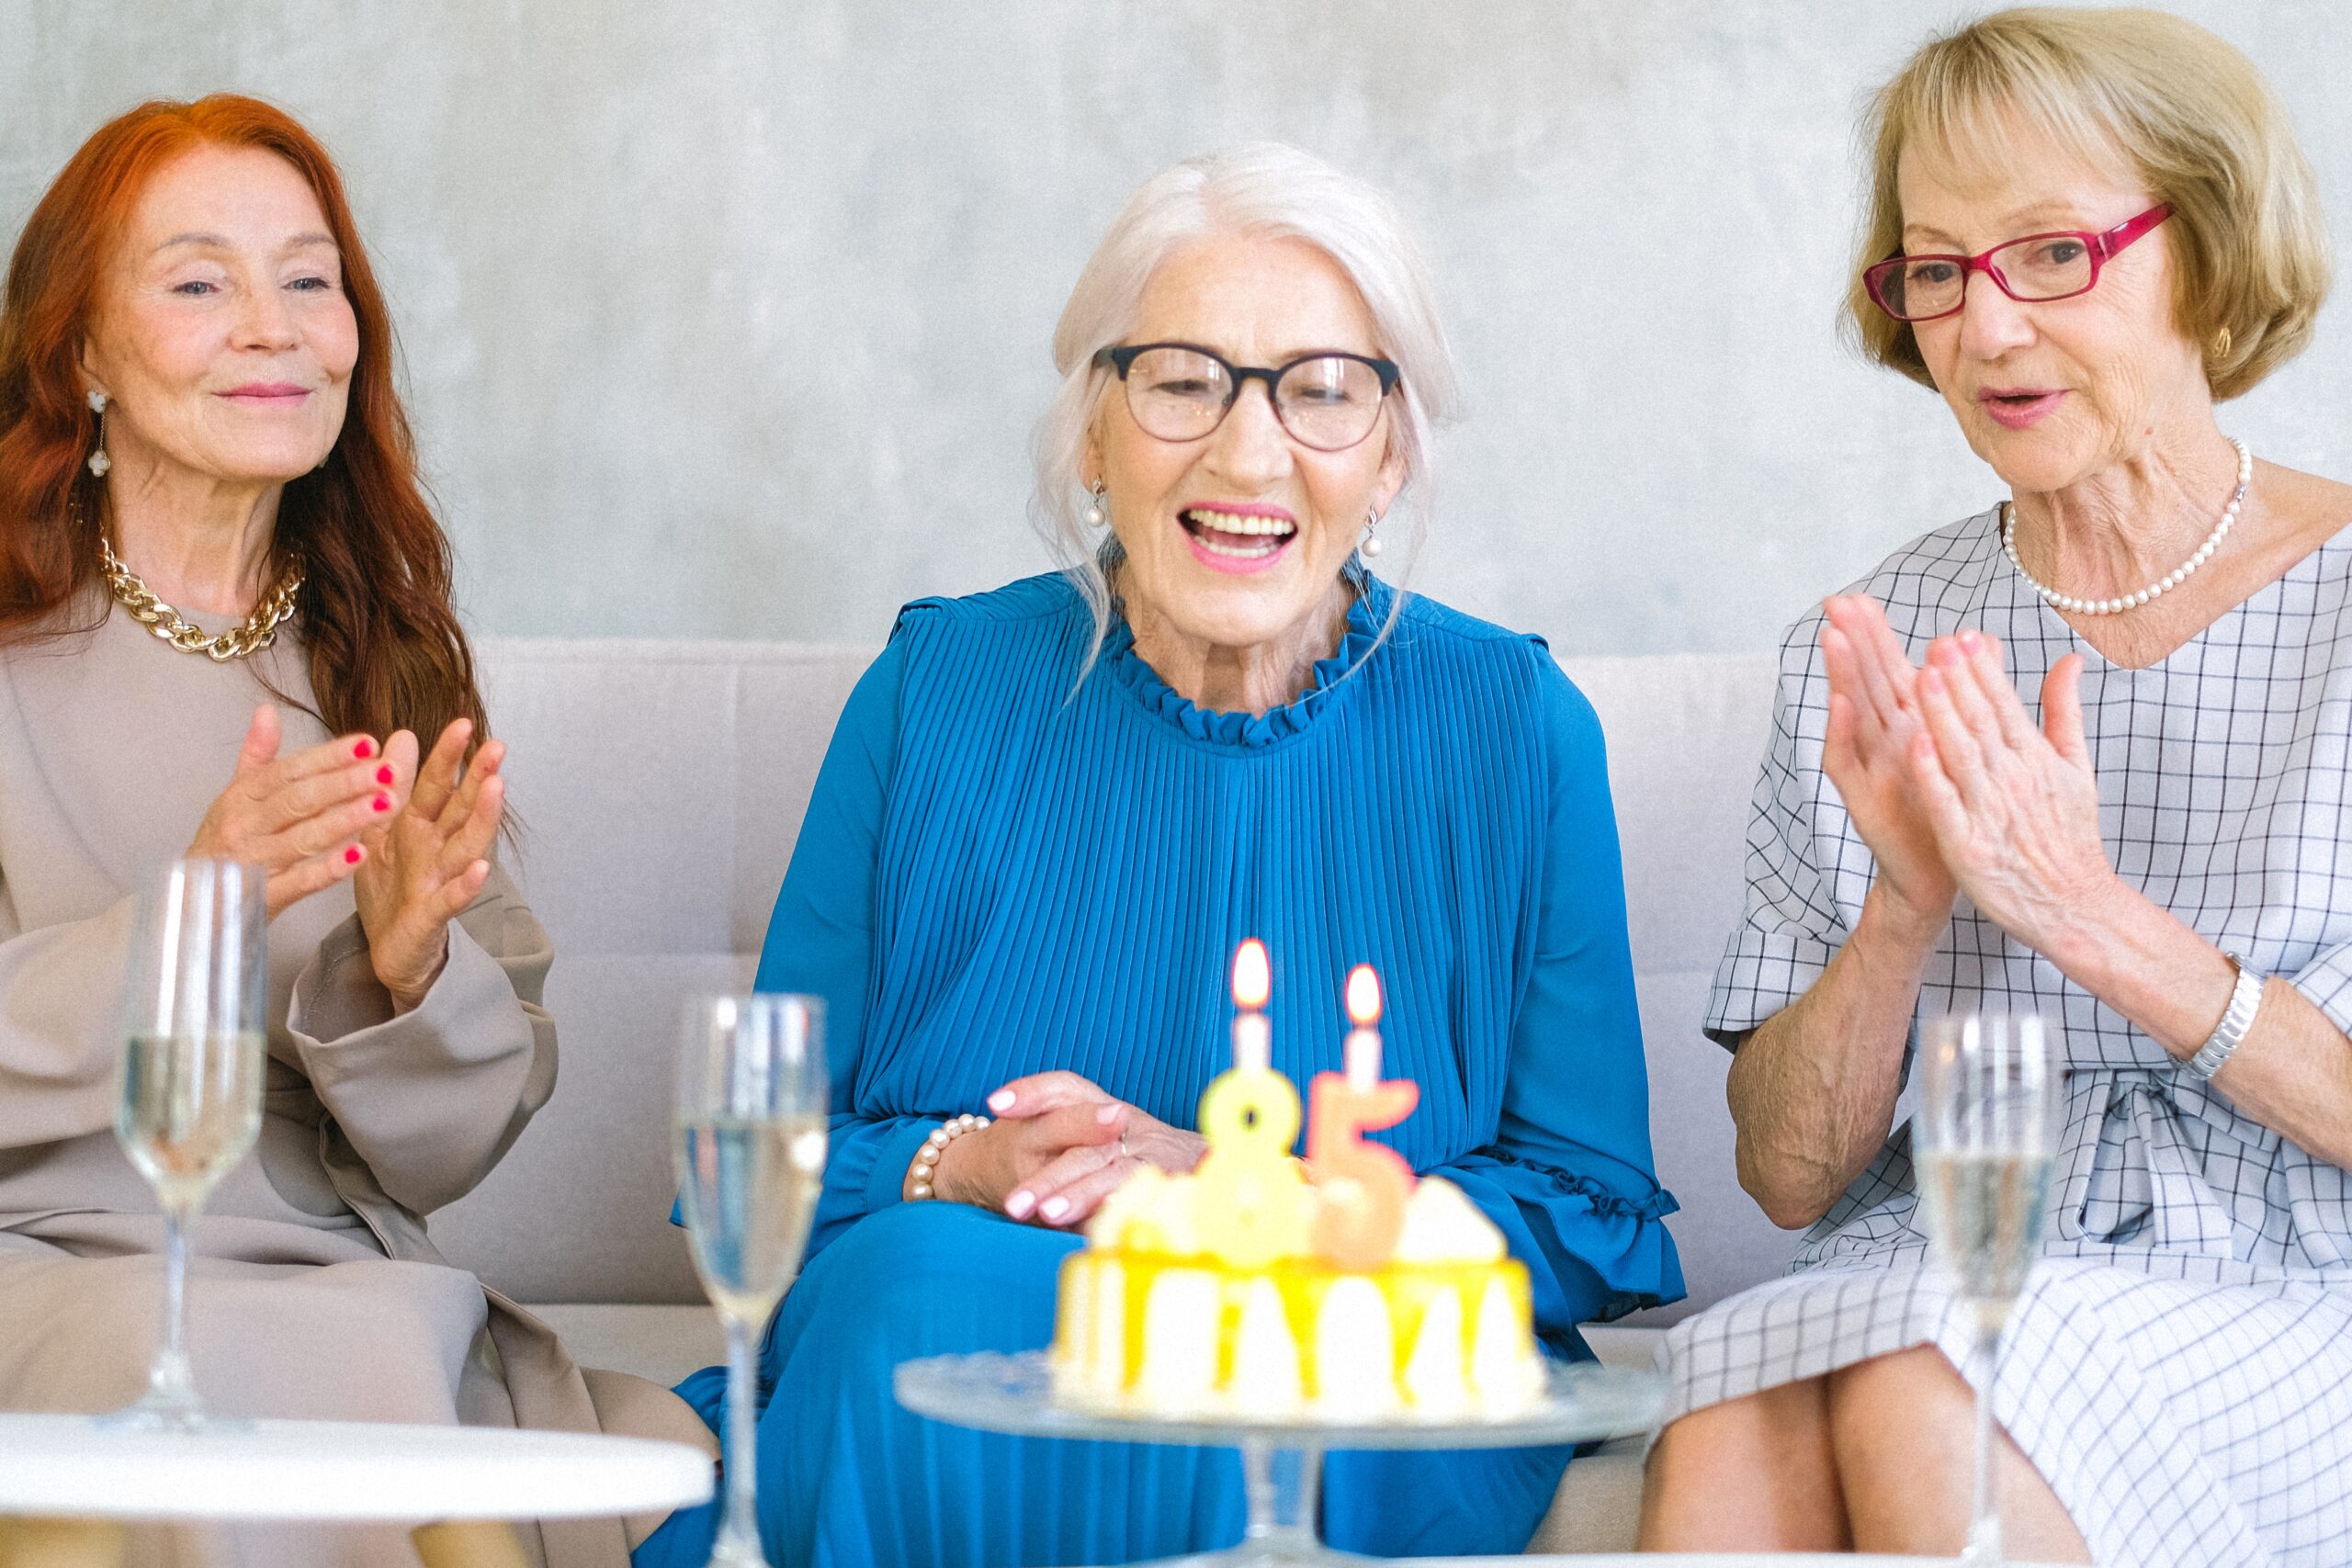 An elderly woman celebrating her birthday